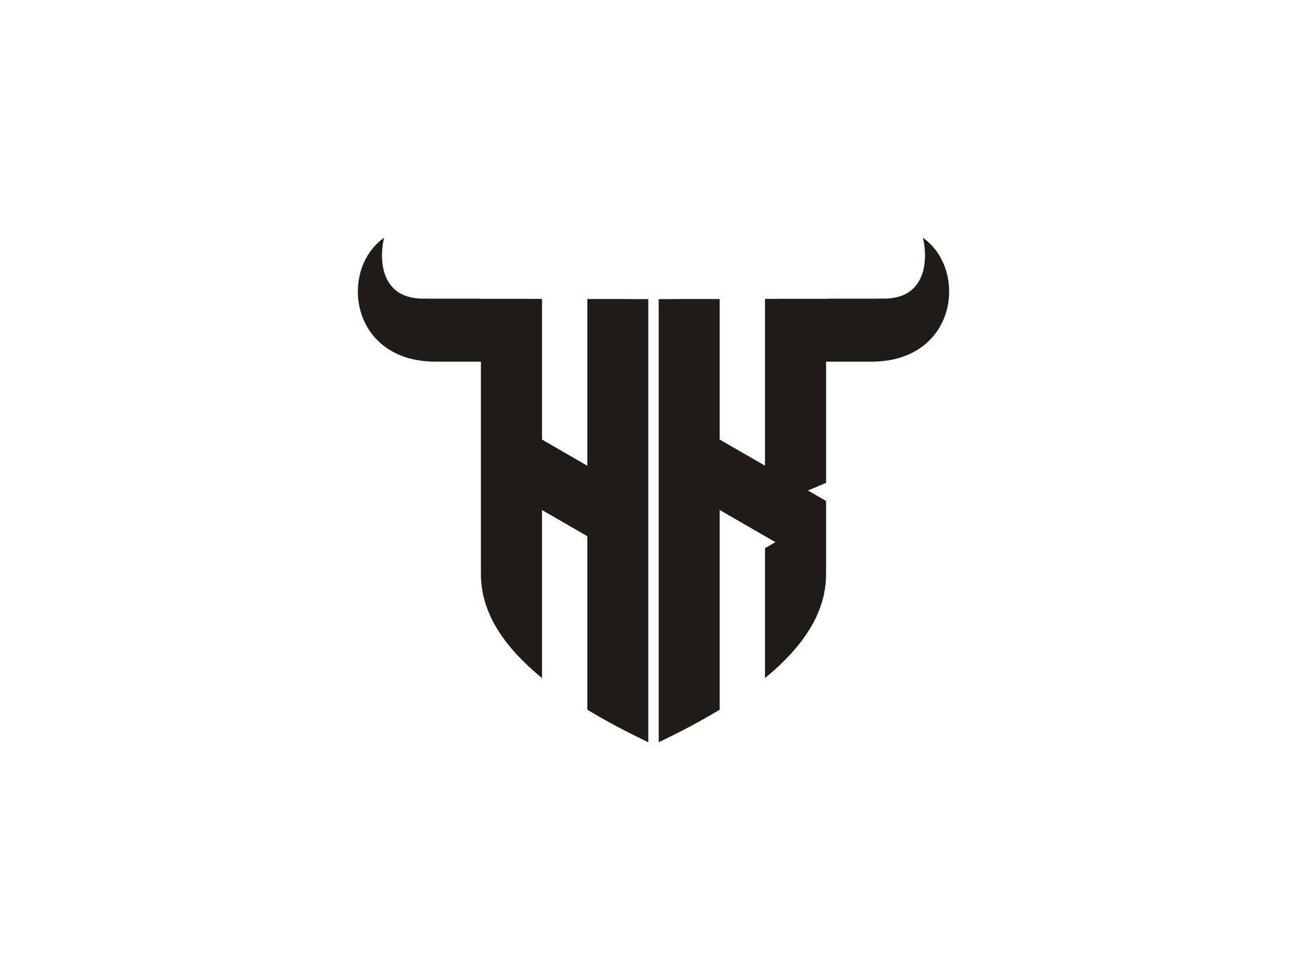 ursprüngliches hk bull logo design. vektor